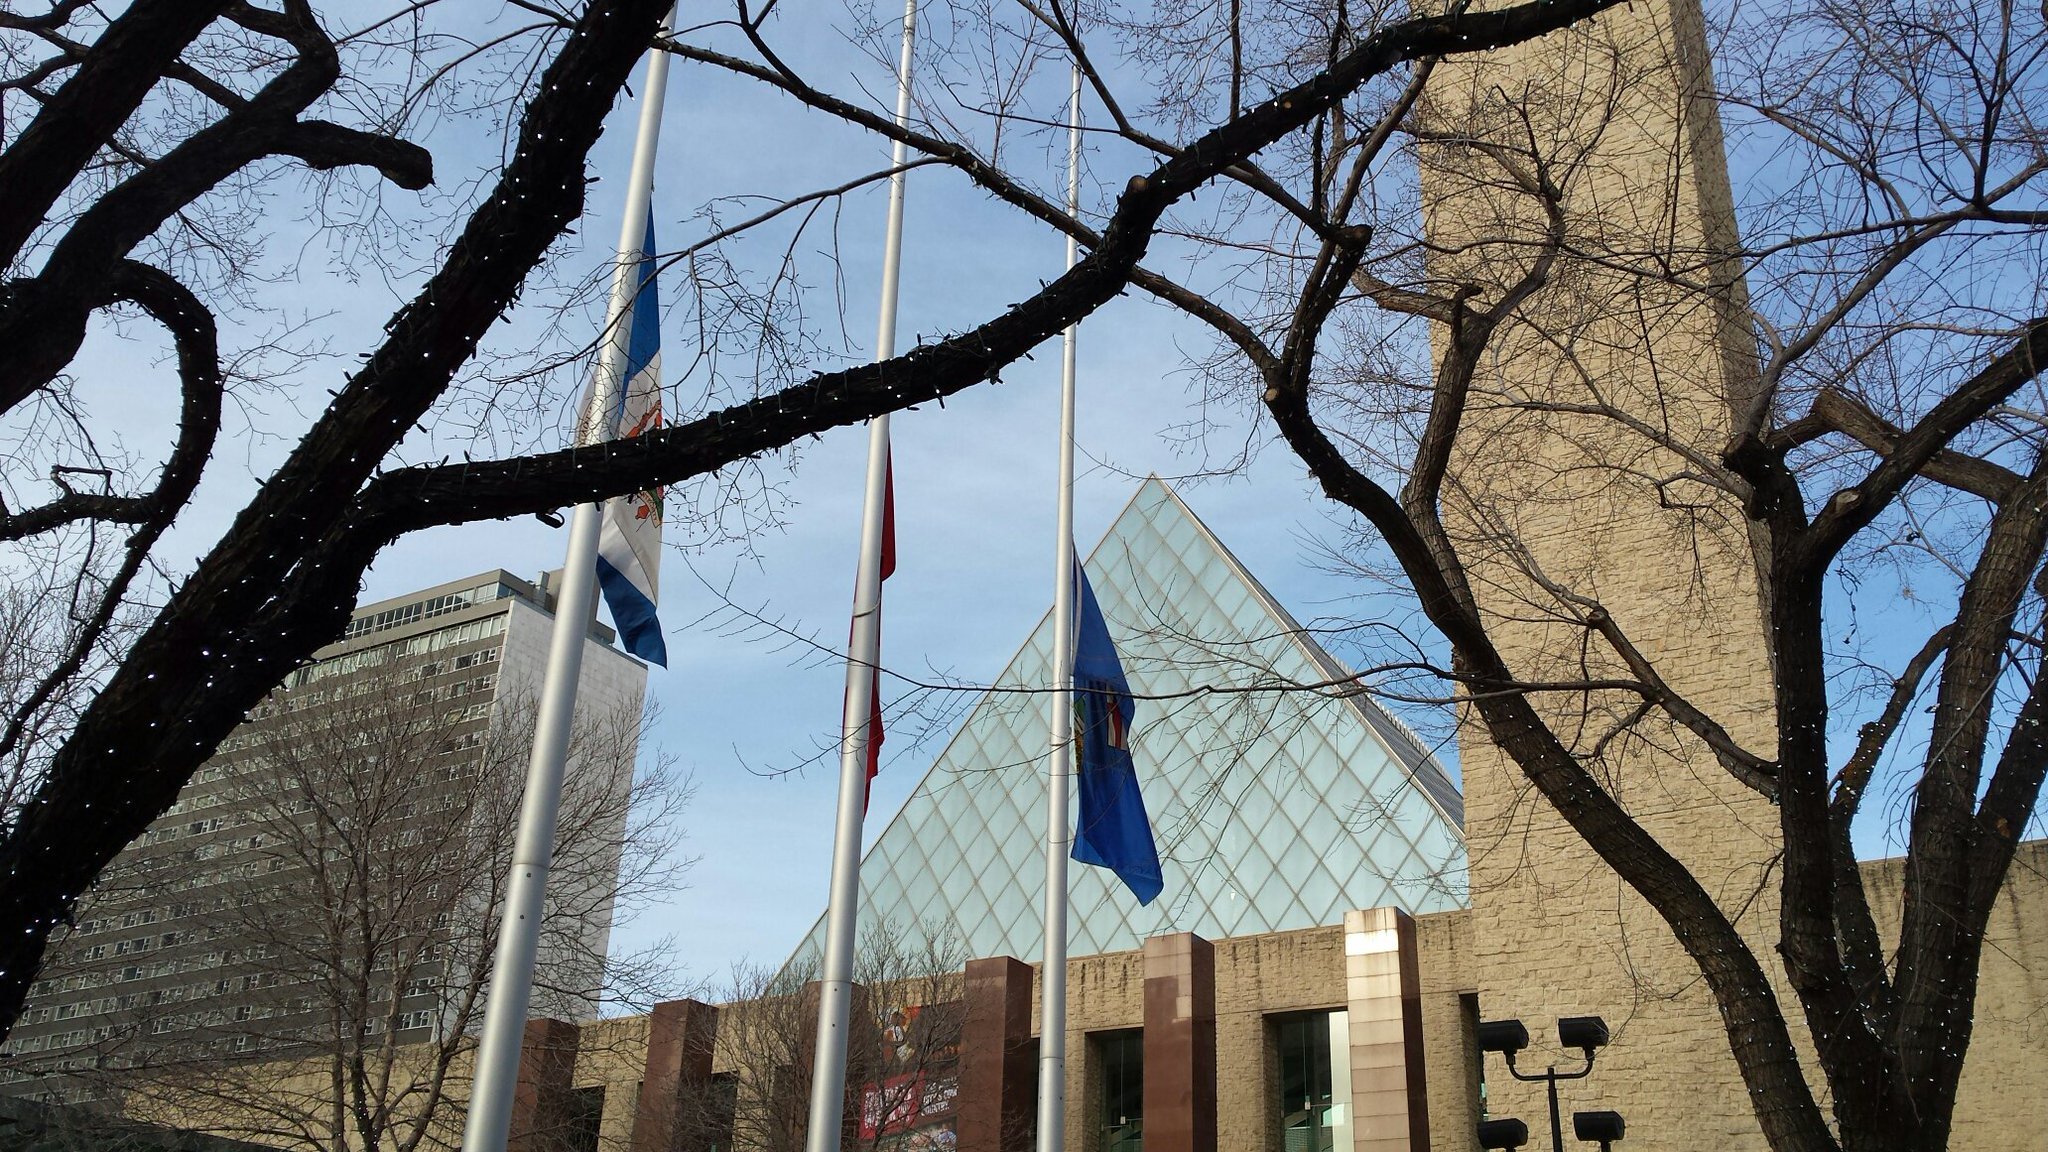 Edmonton City Council